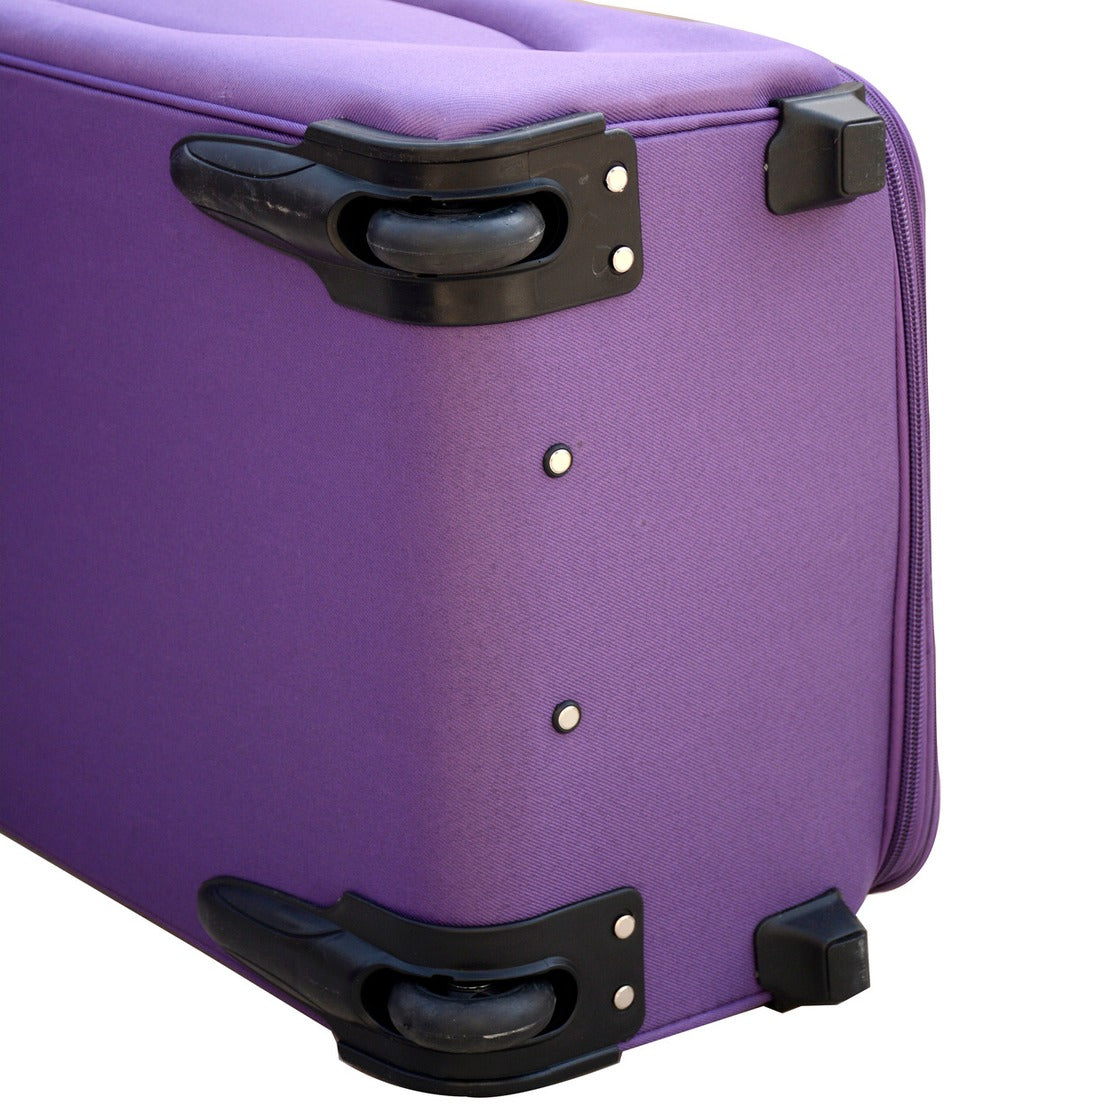 20" Purple Colour SJ JIAN 2 Wheel Luggage Lightweight Soft Material Carry On Trolley Bag